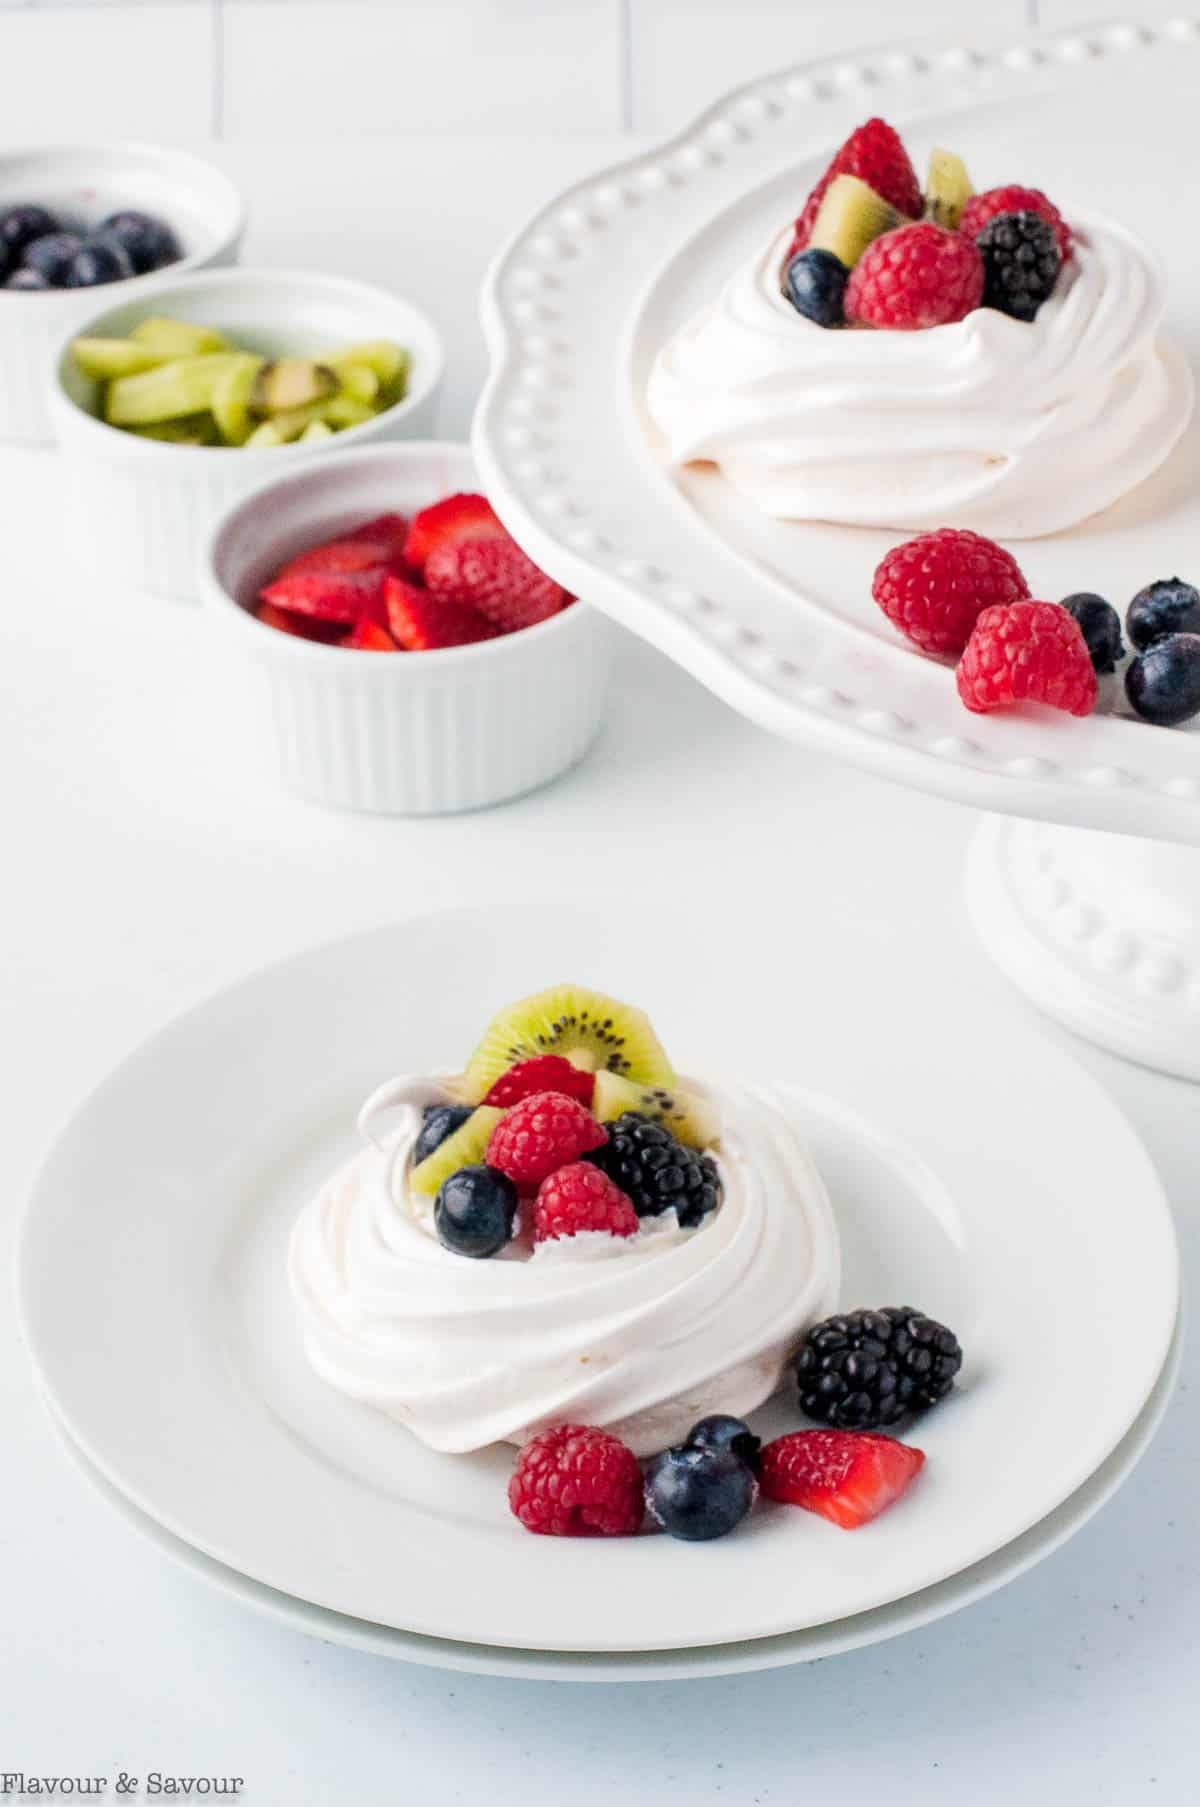 Mini pavlova desserts decorated with fresh berries and kiwi.